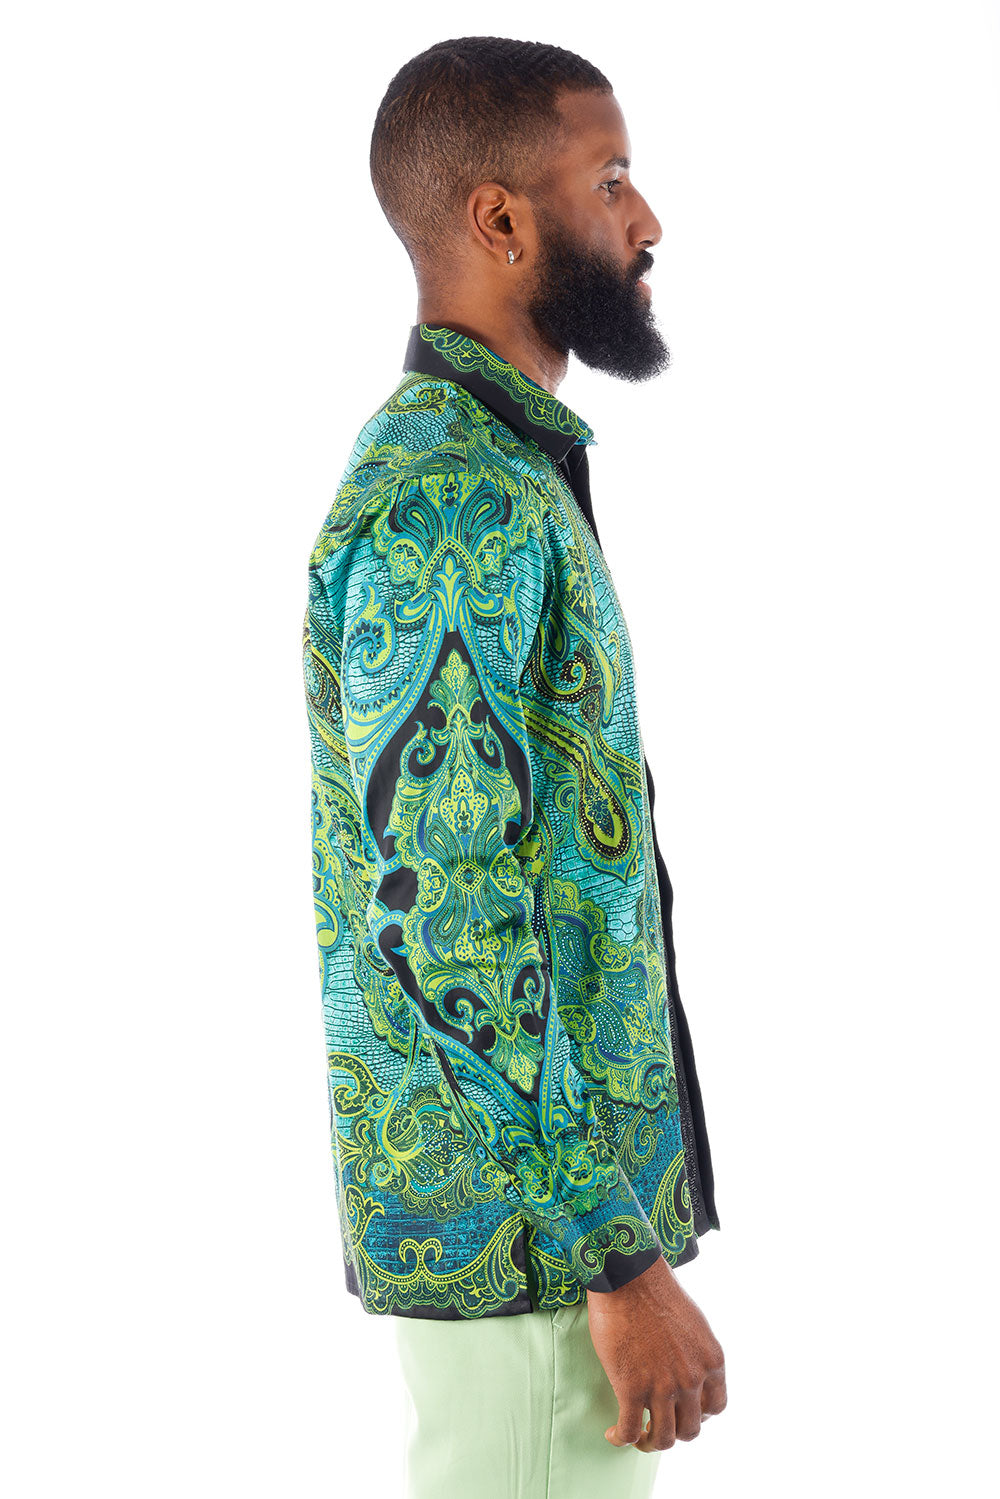 BARABAS Men's Rhinestone Floral Paisley Long Sleeve Shirts 3SPR433 Green